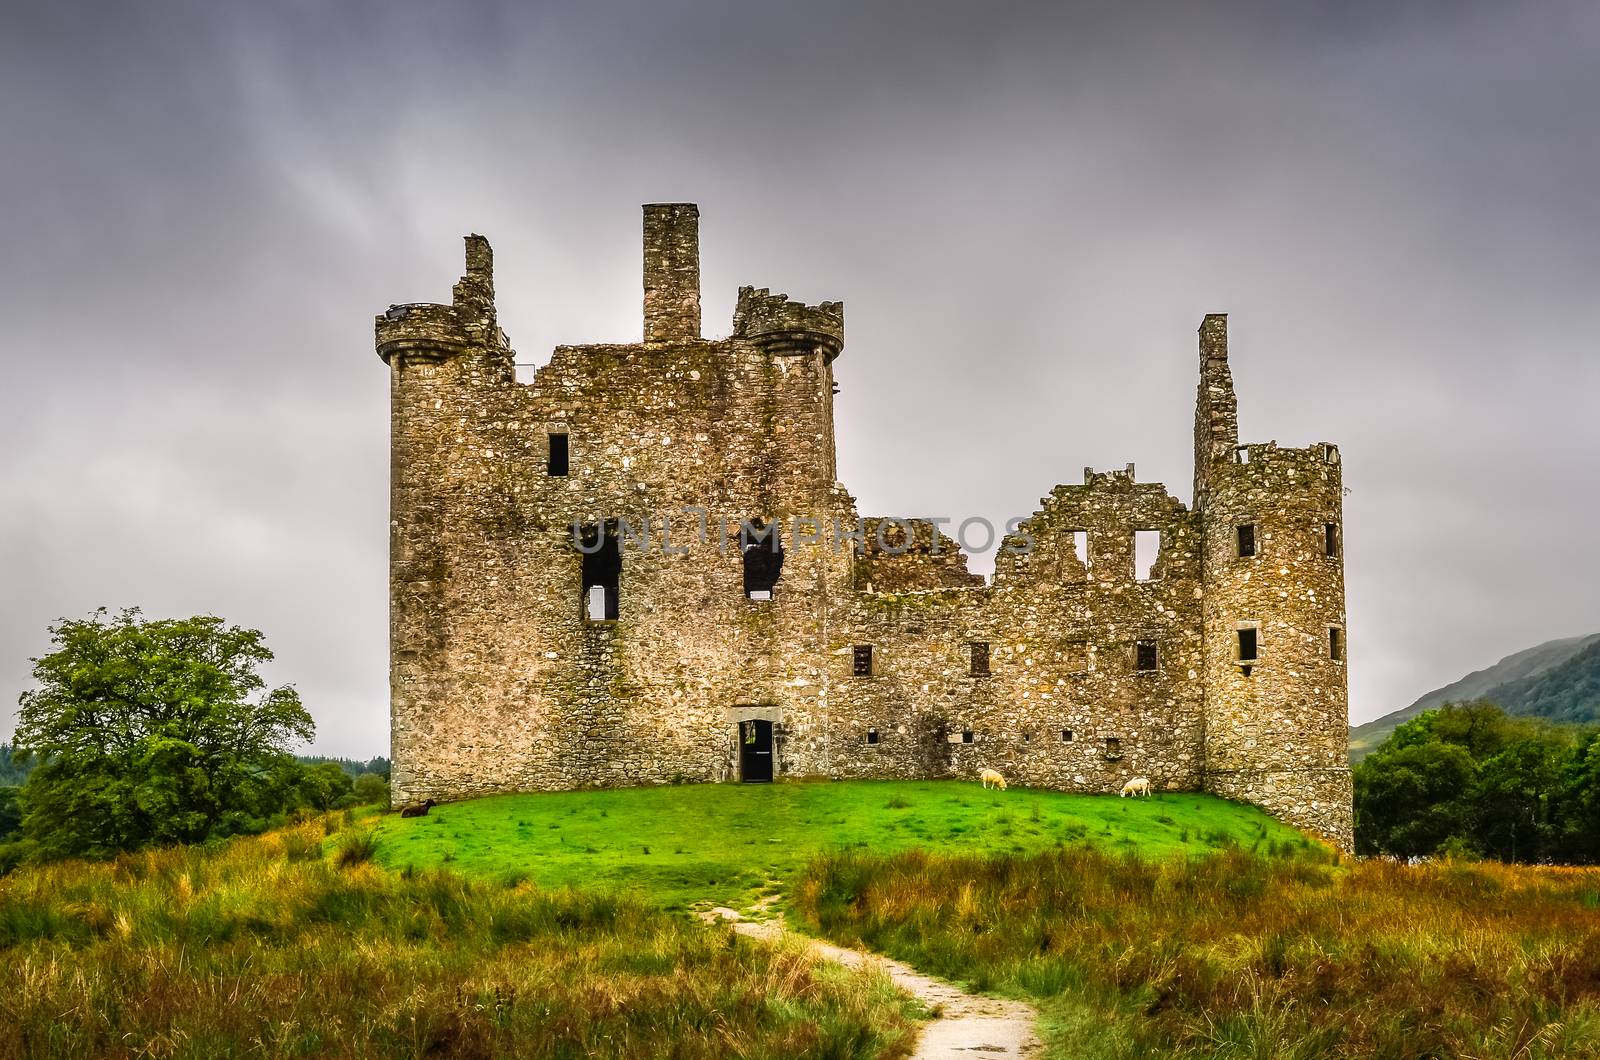 Scenic view of old medieval Kilchurn castle ruins in Scottish Highlands, United Kingdom